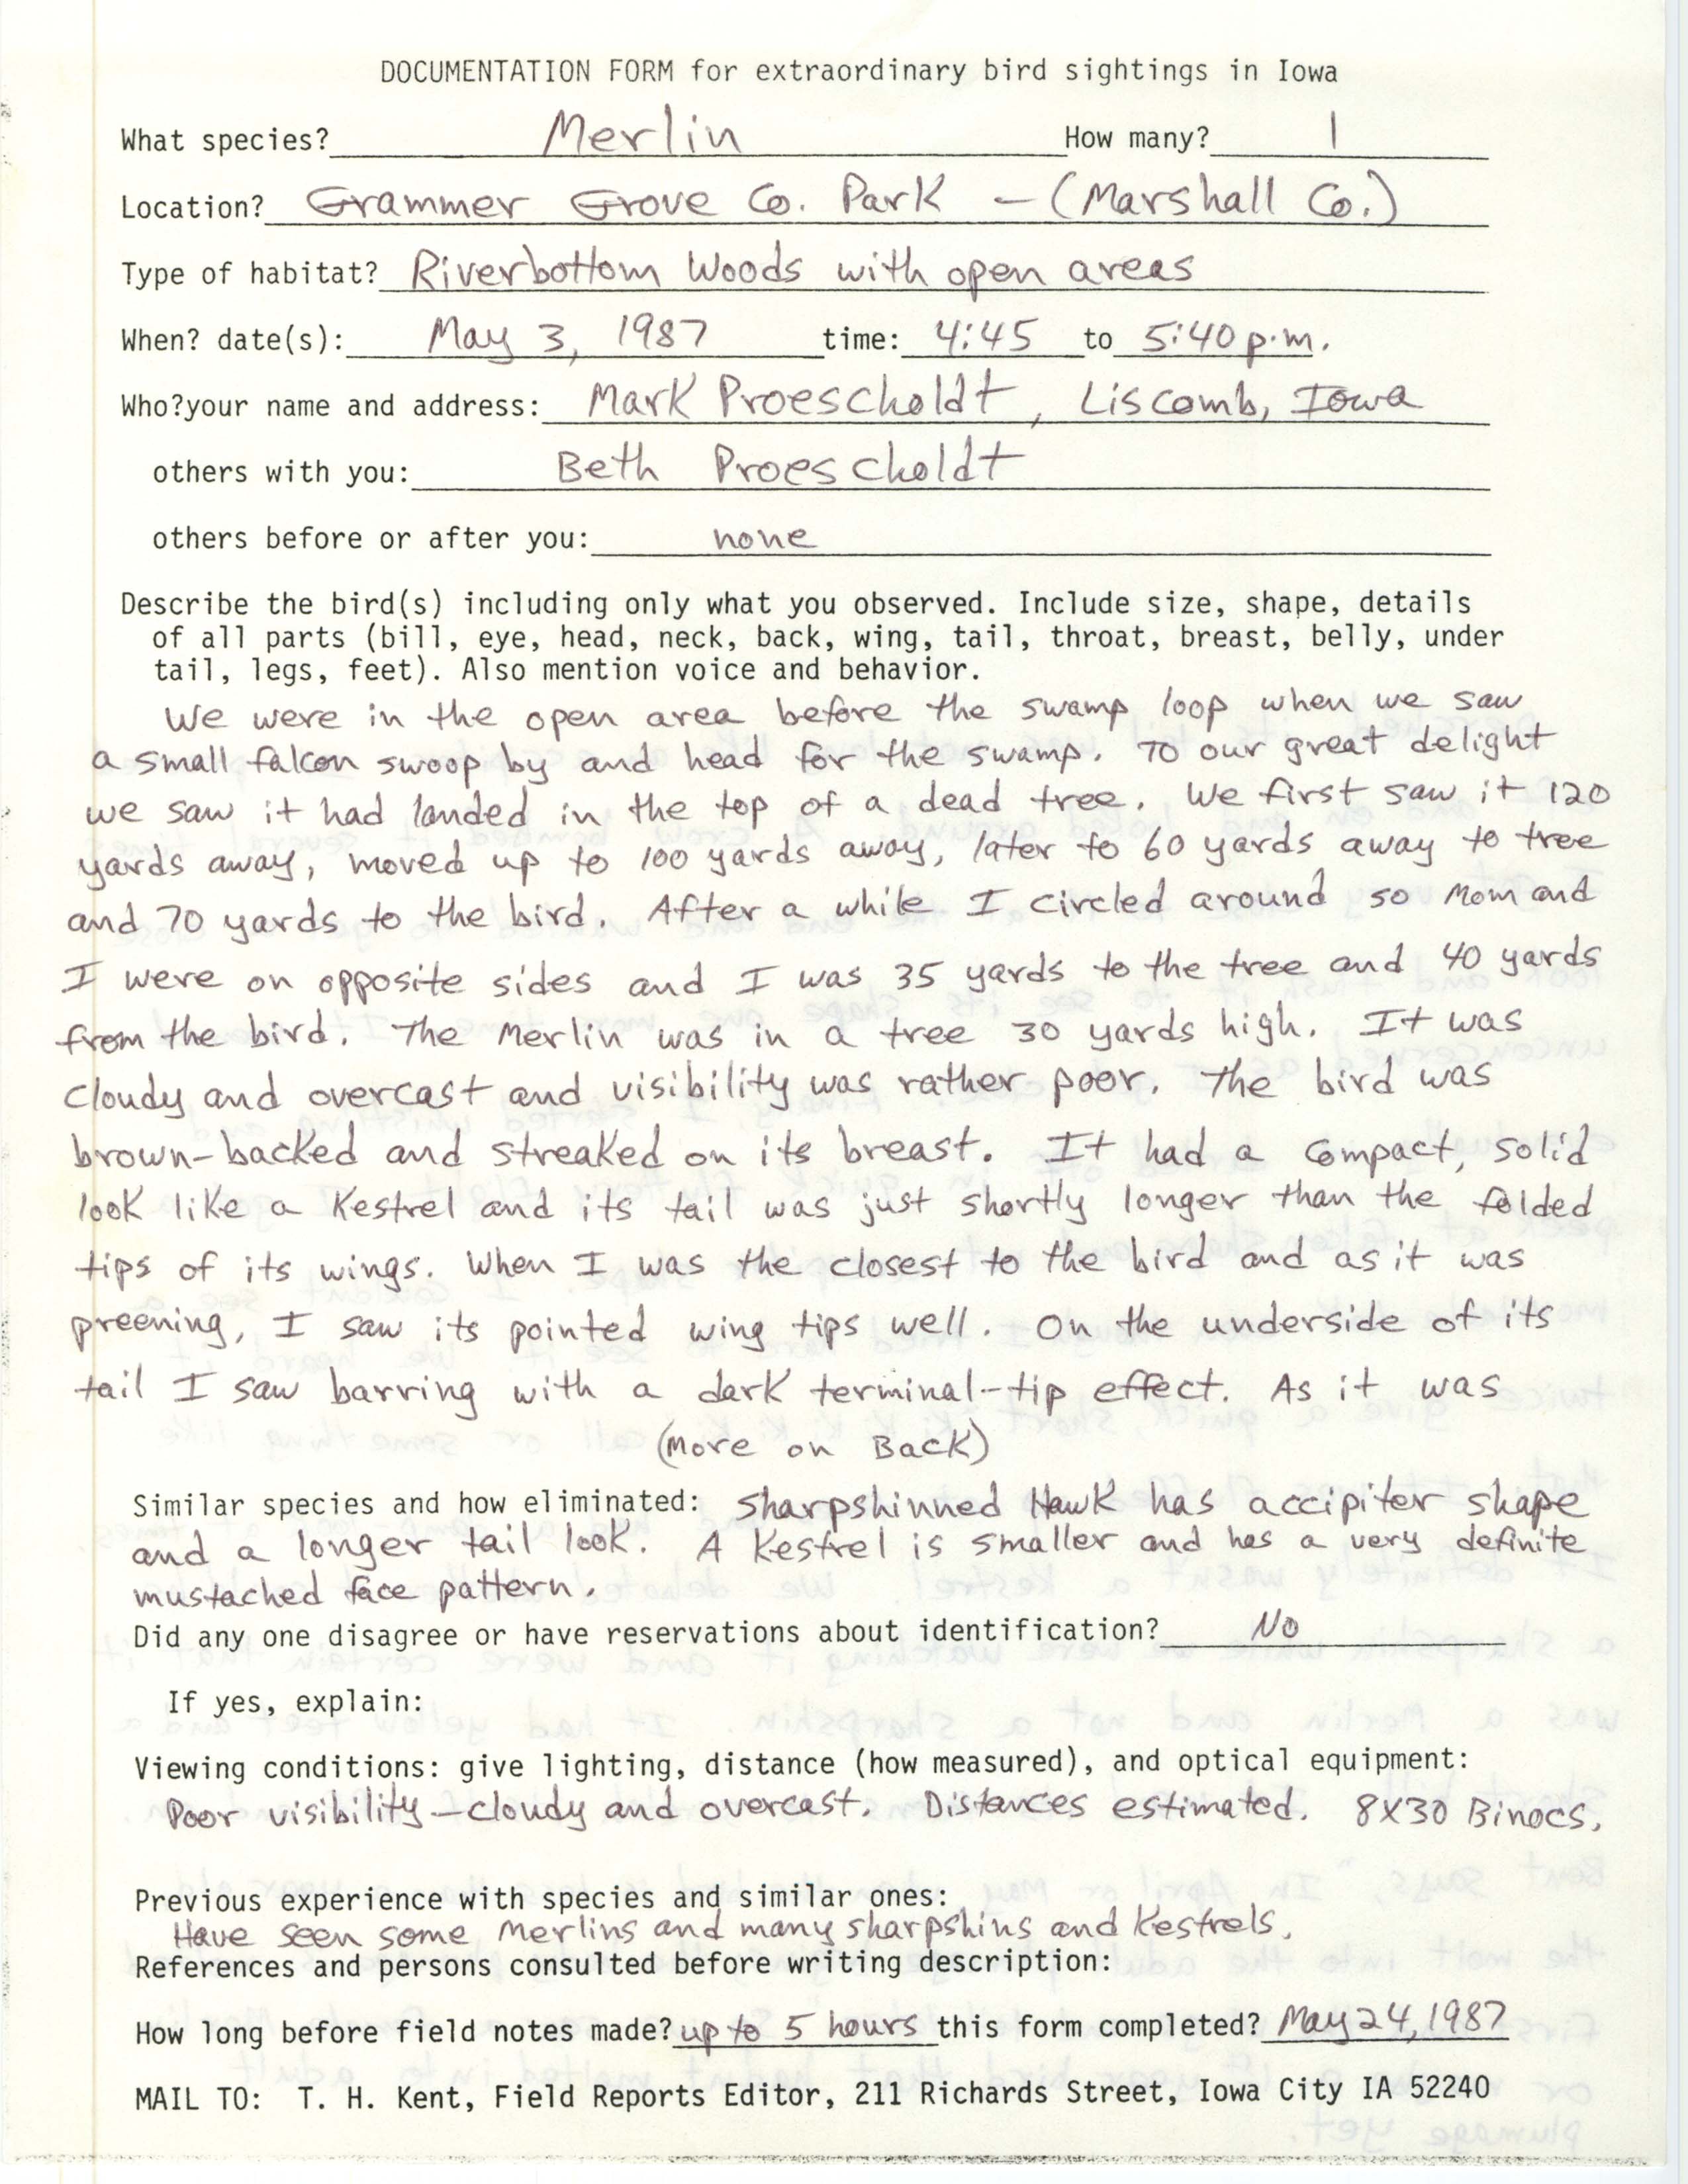 Rare bird documentation form for Merlin at Grammer Grove Wildlife Area, 1987